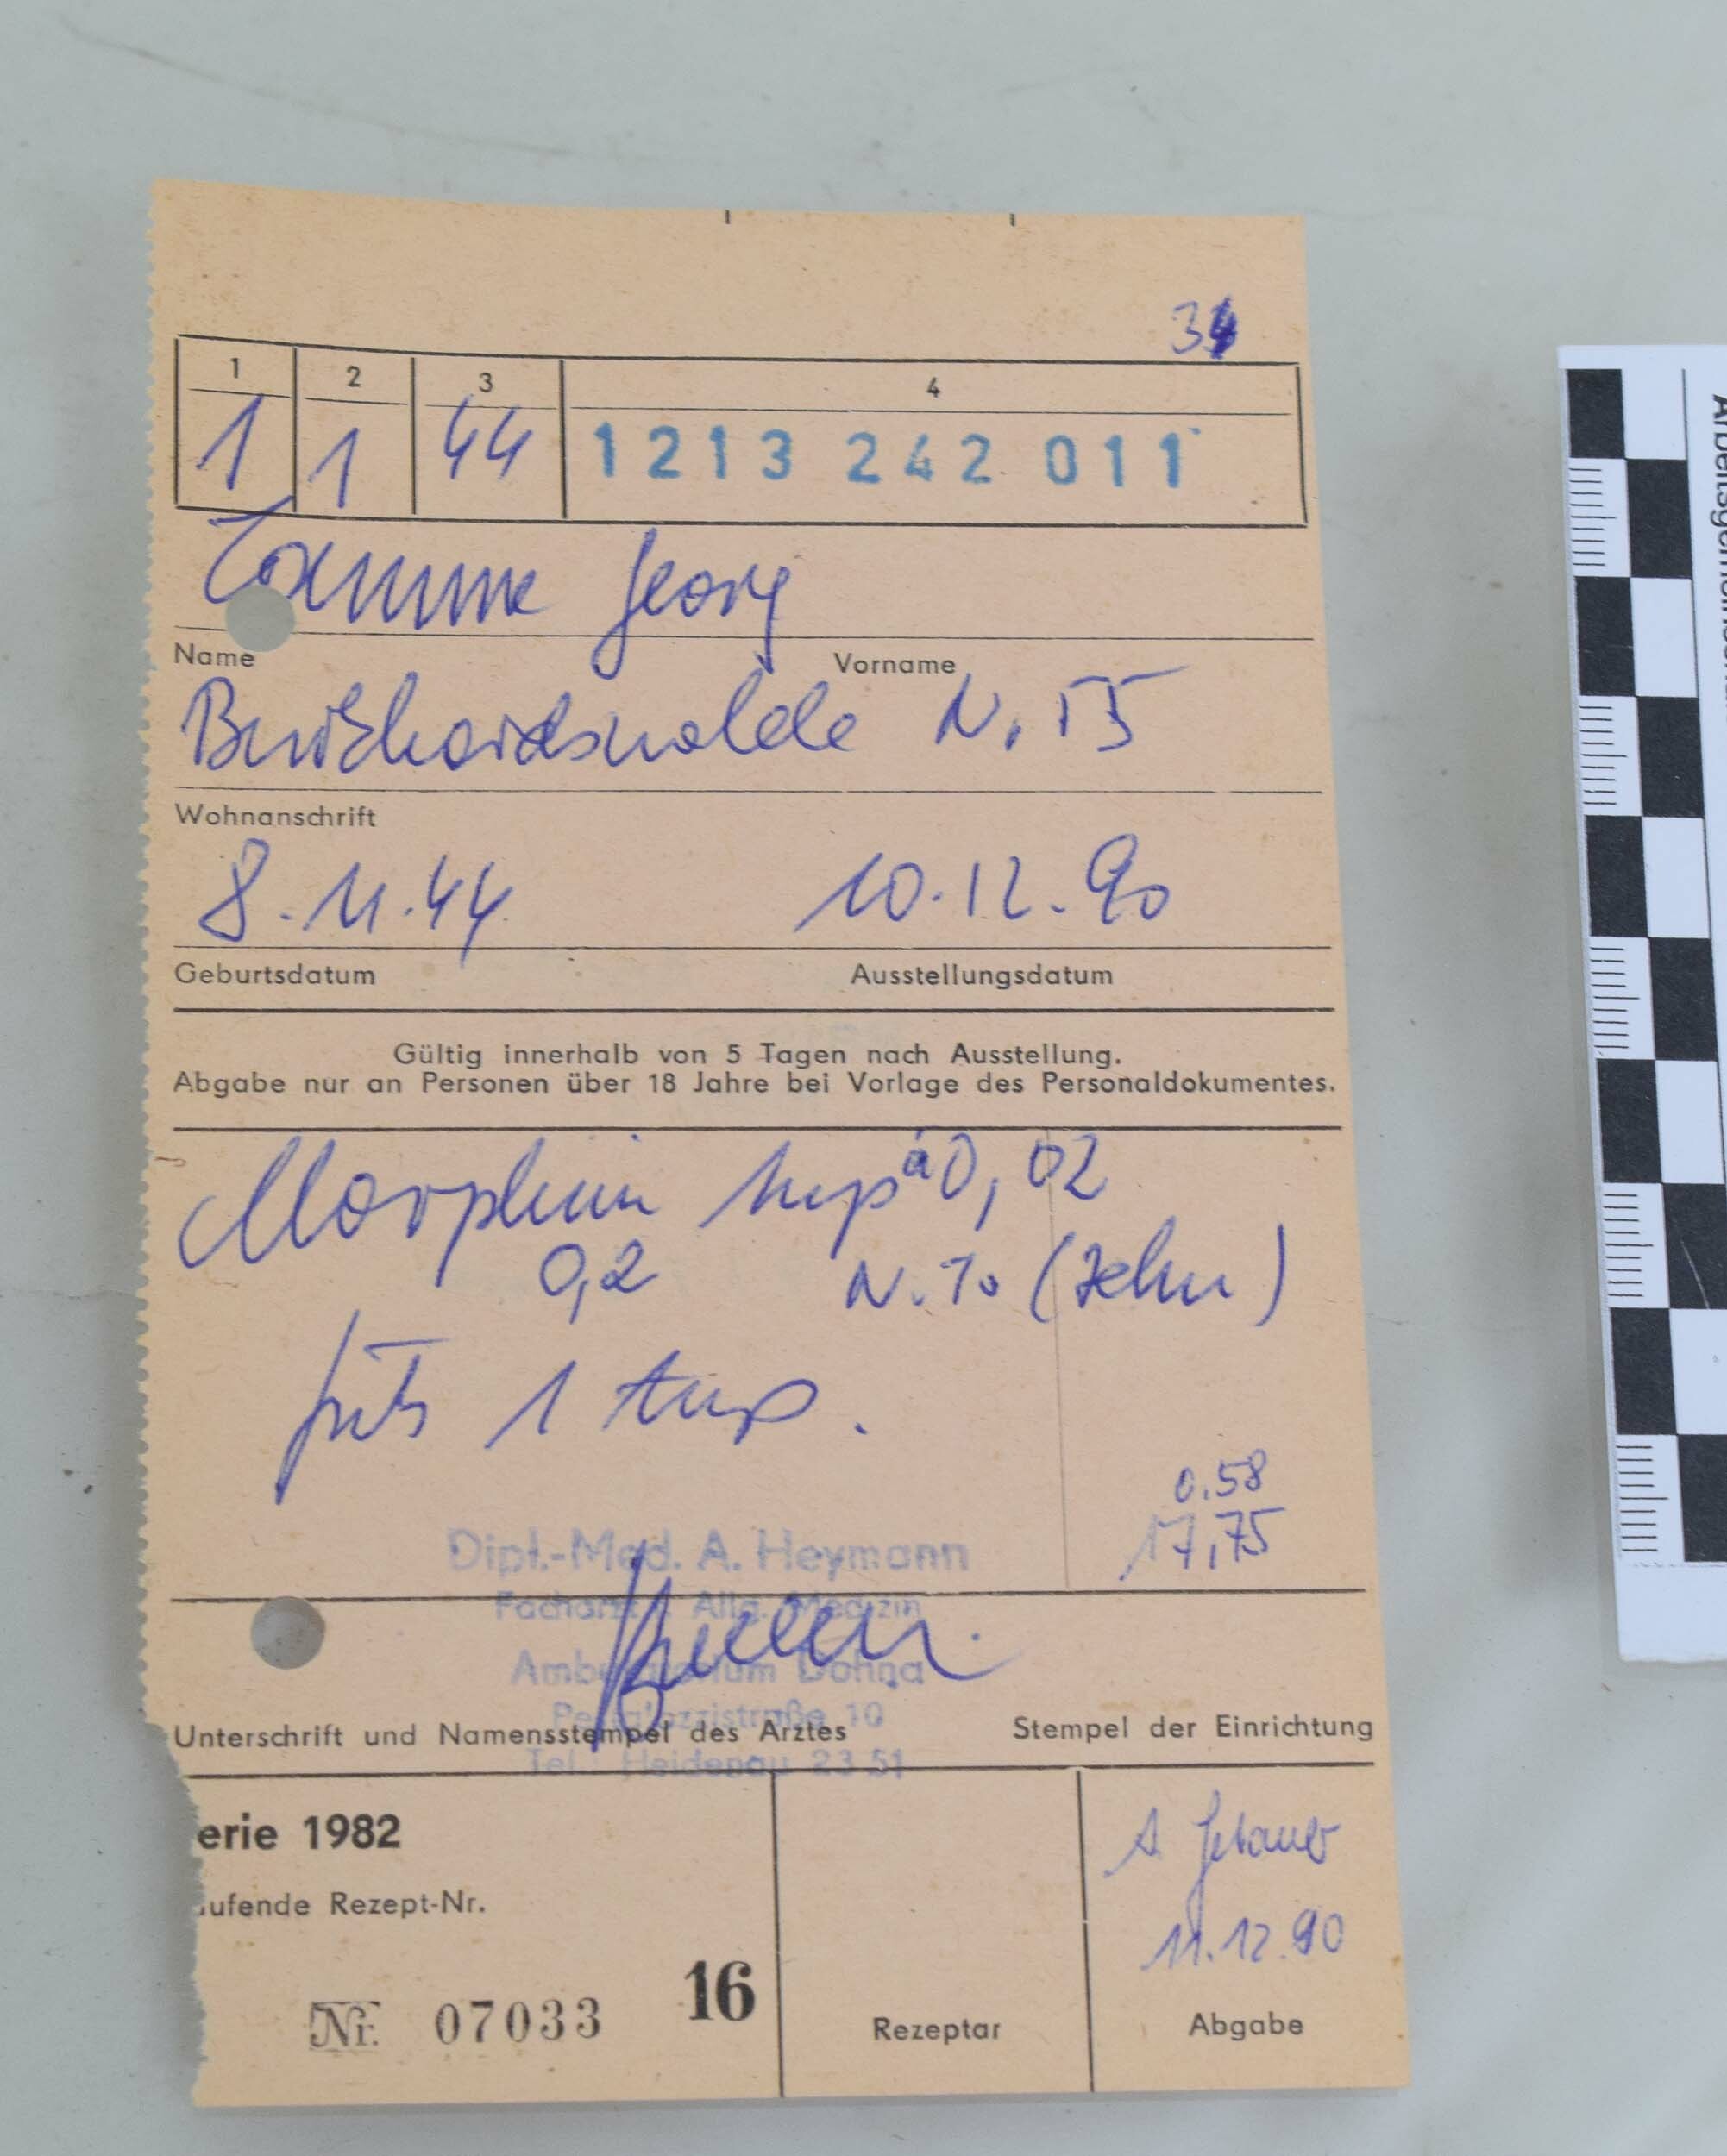 Rezeptbeispiel 1990 (Heimatmuseum Dohna CC BY-NC-SA)